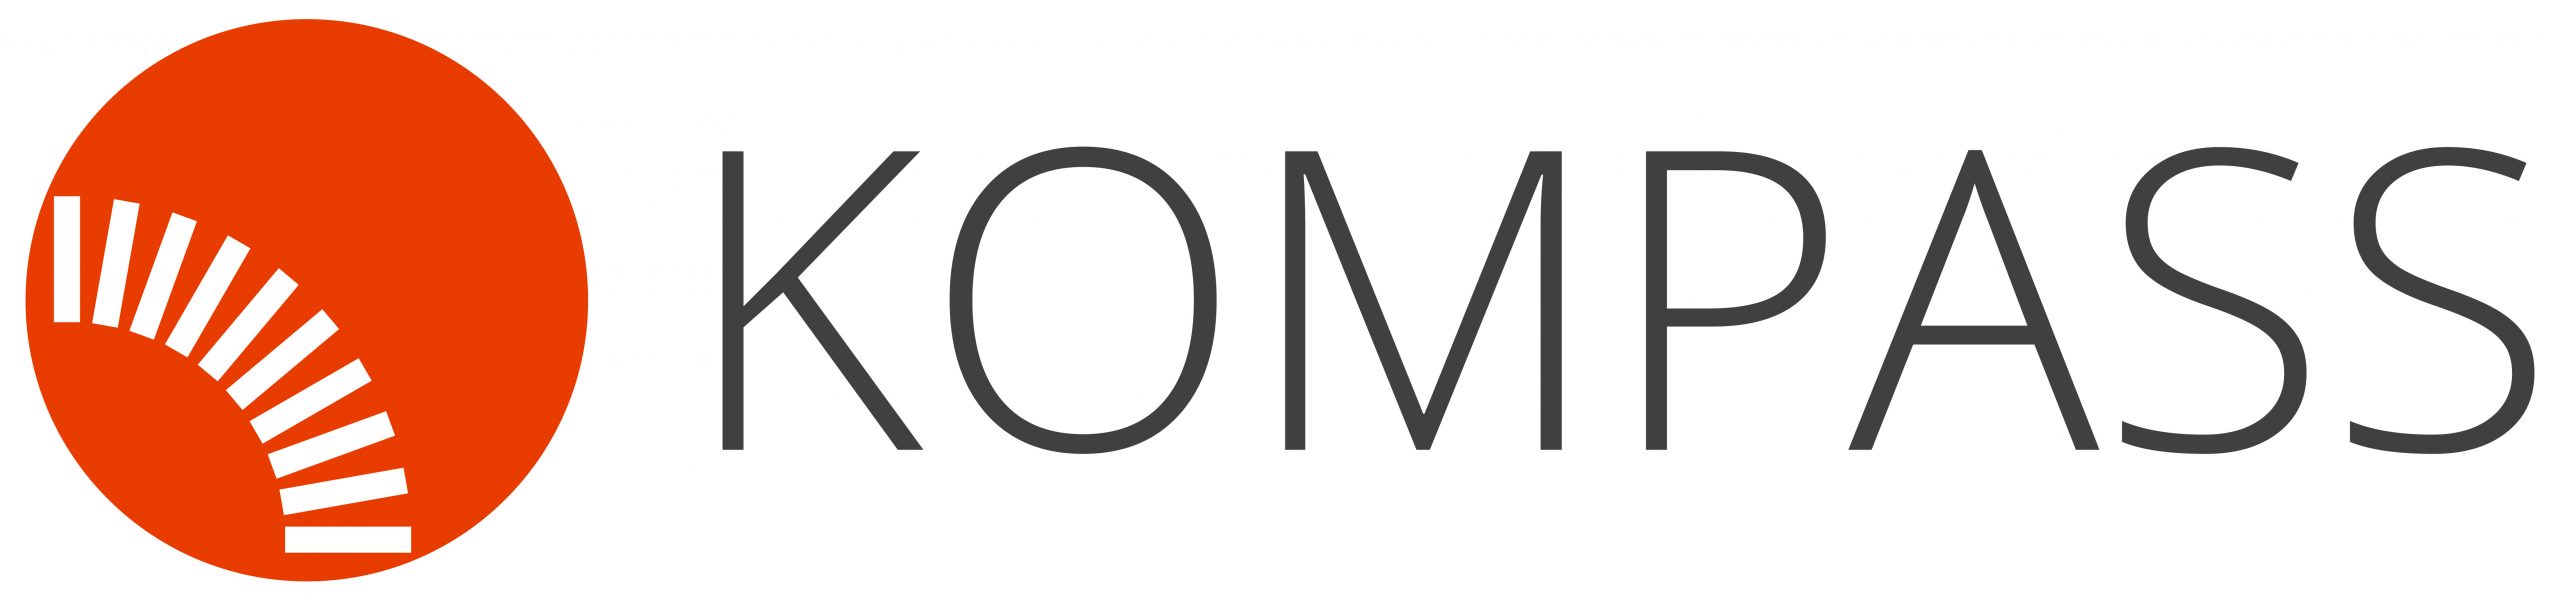 Kompass_Logo